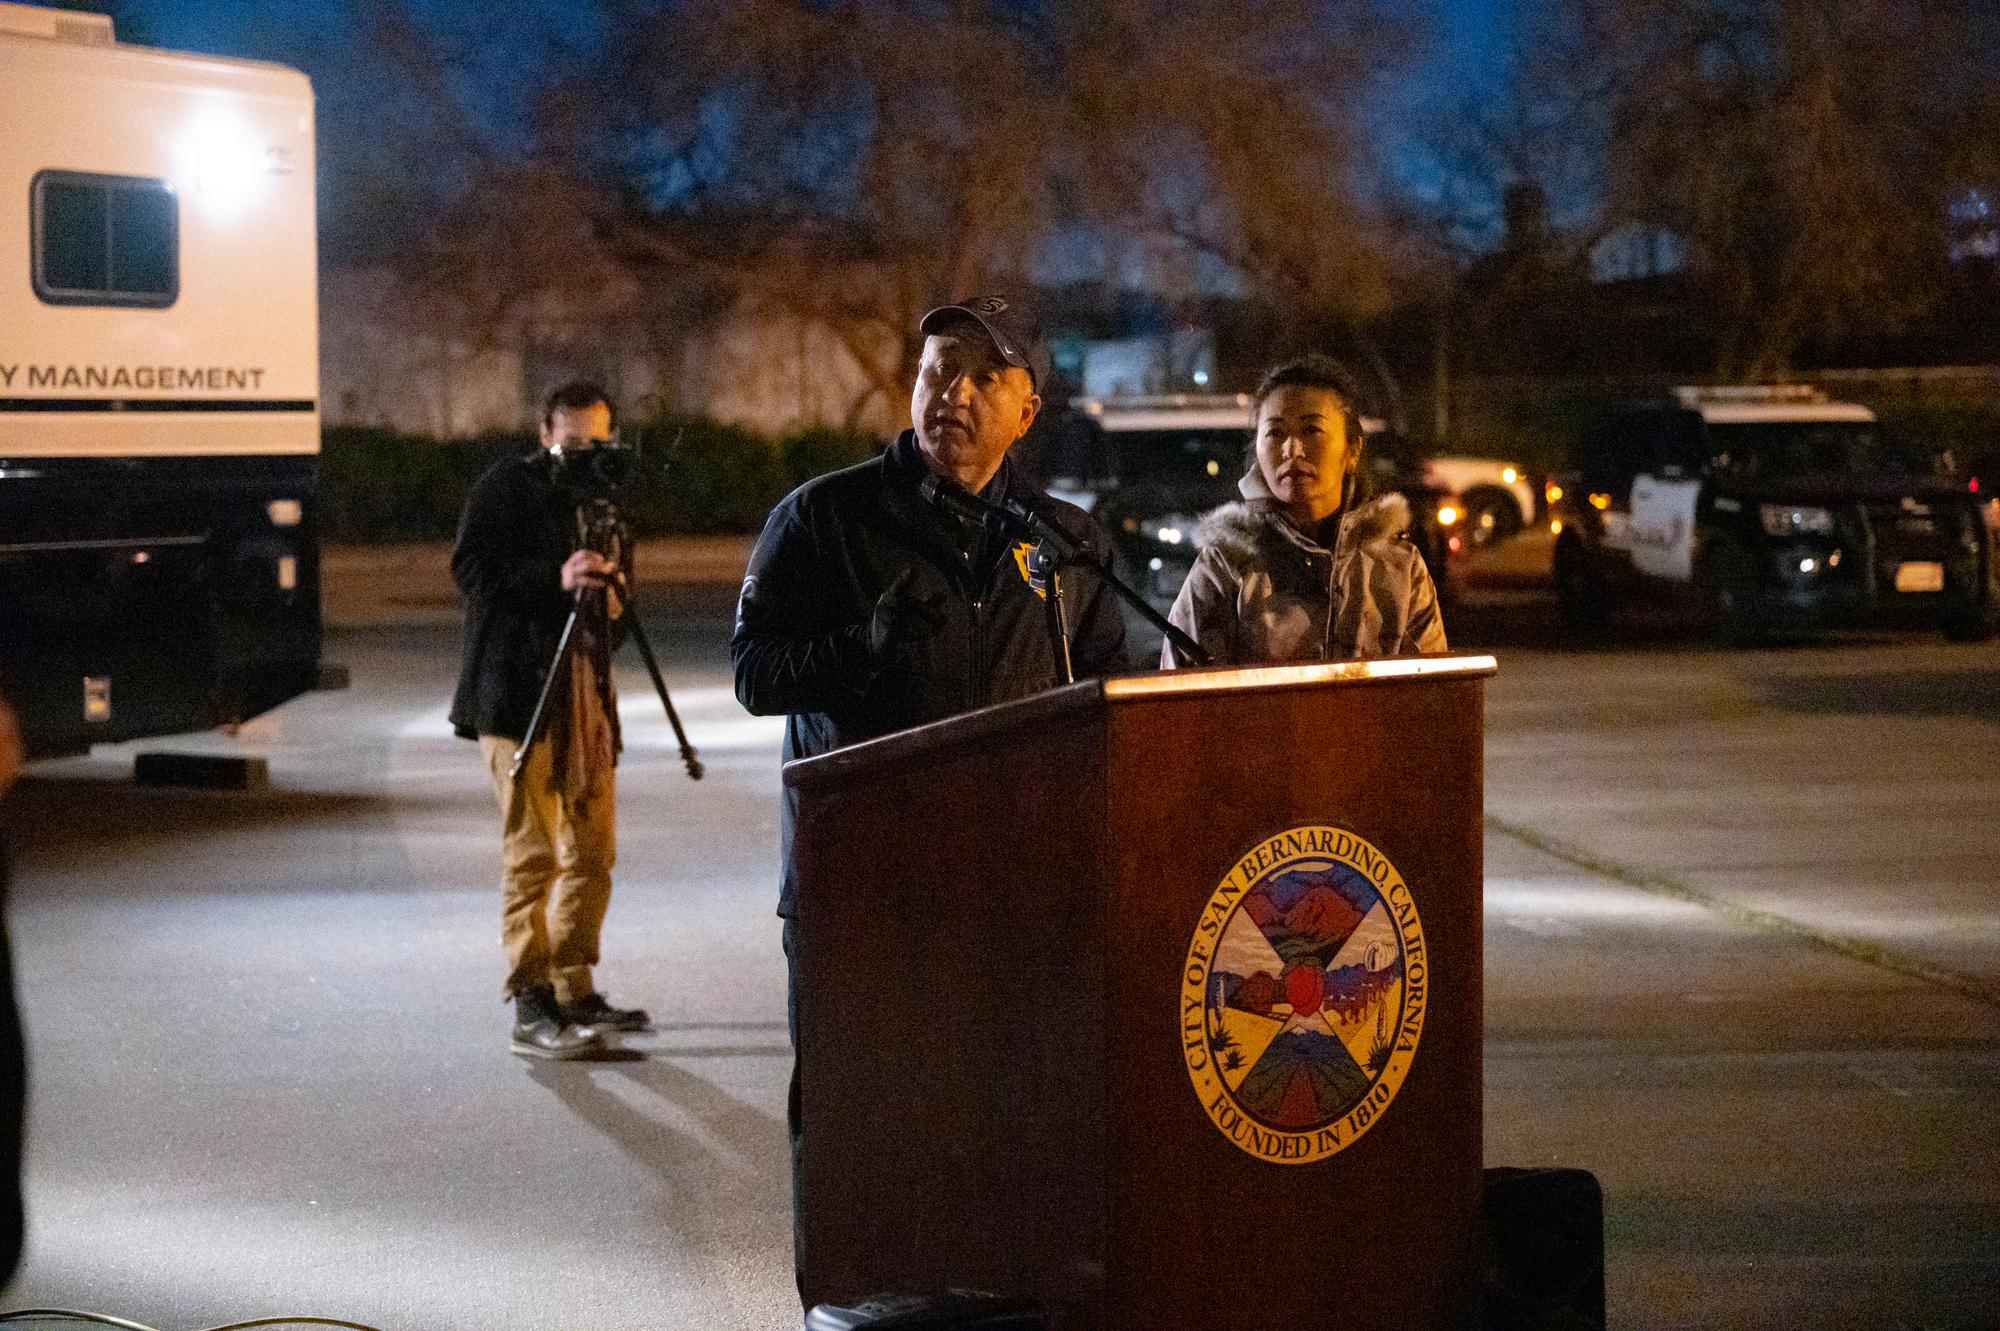 Supervisor Joe Baca. Jr., is seen at a podium talking to volunteers at sunrise.